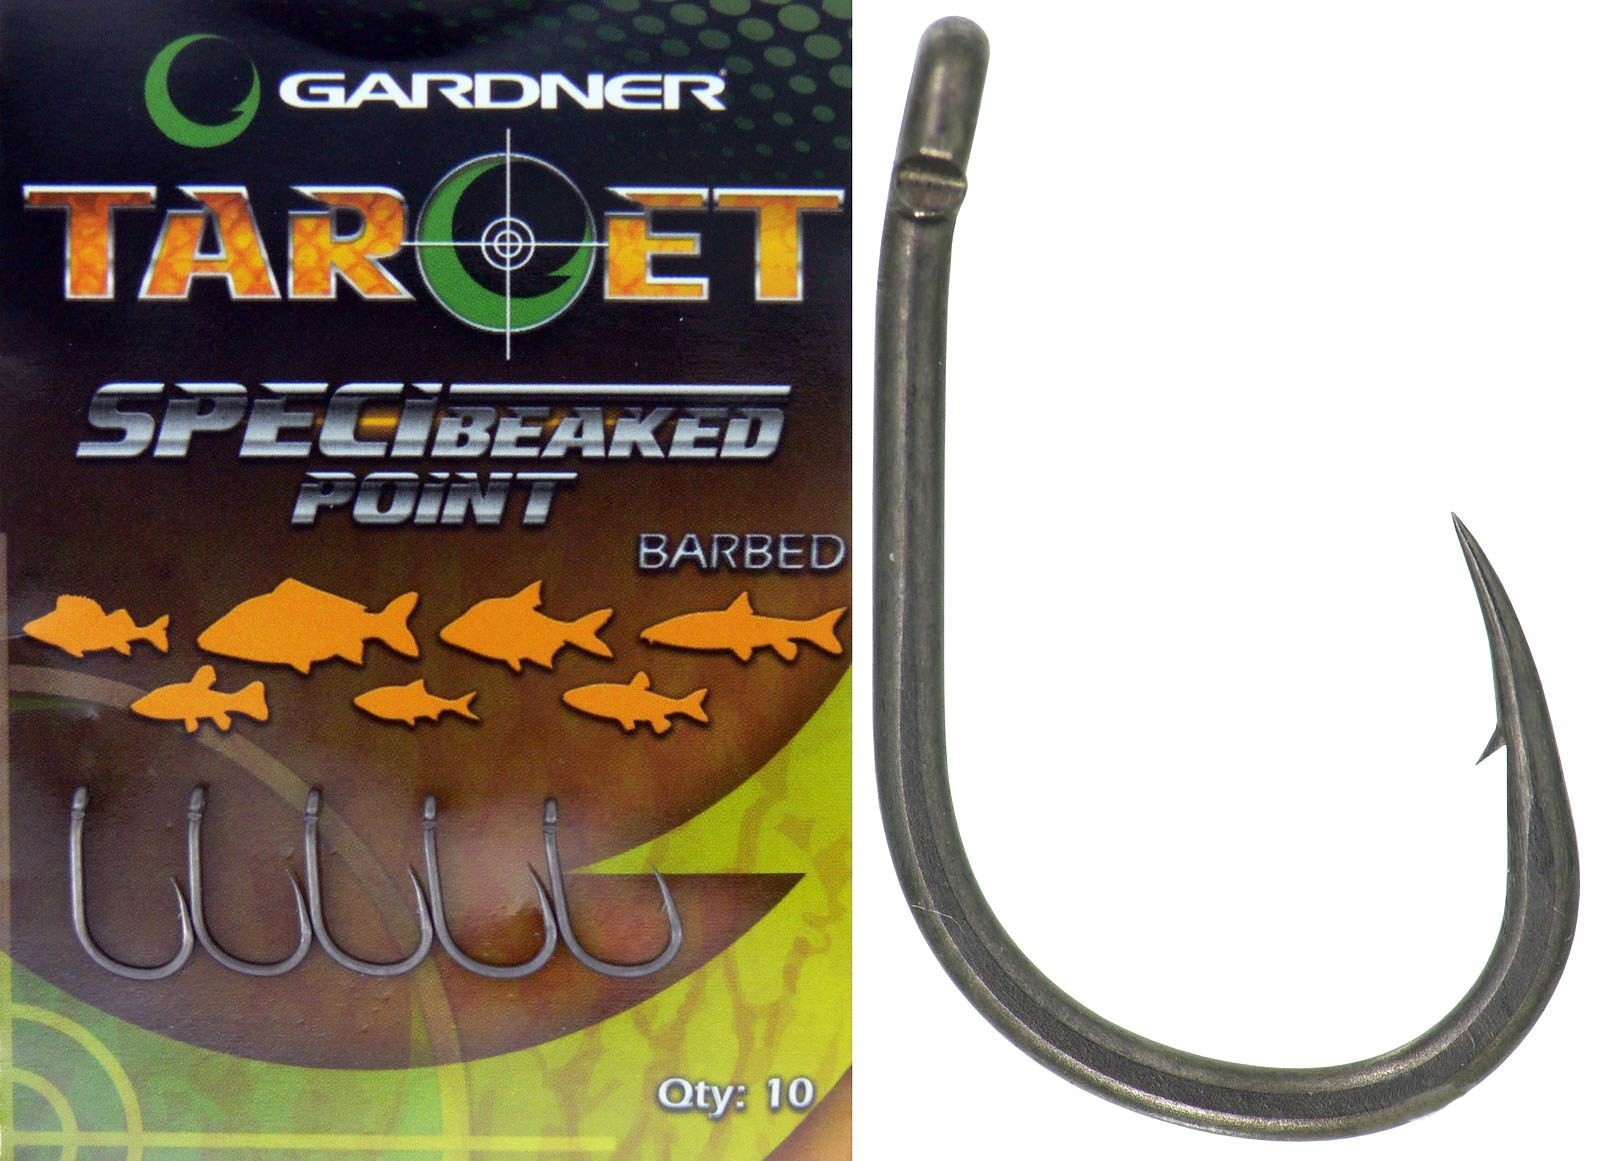 Крючки Gardner Target speci-beaked point barbed №10 - фото 1